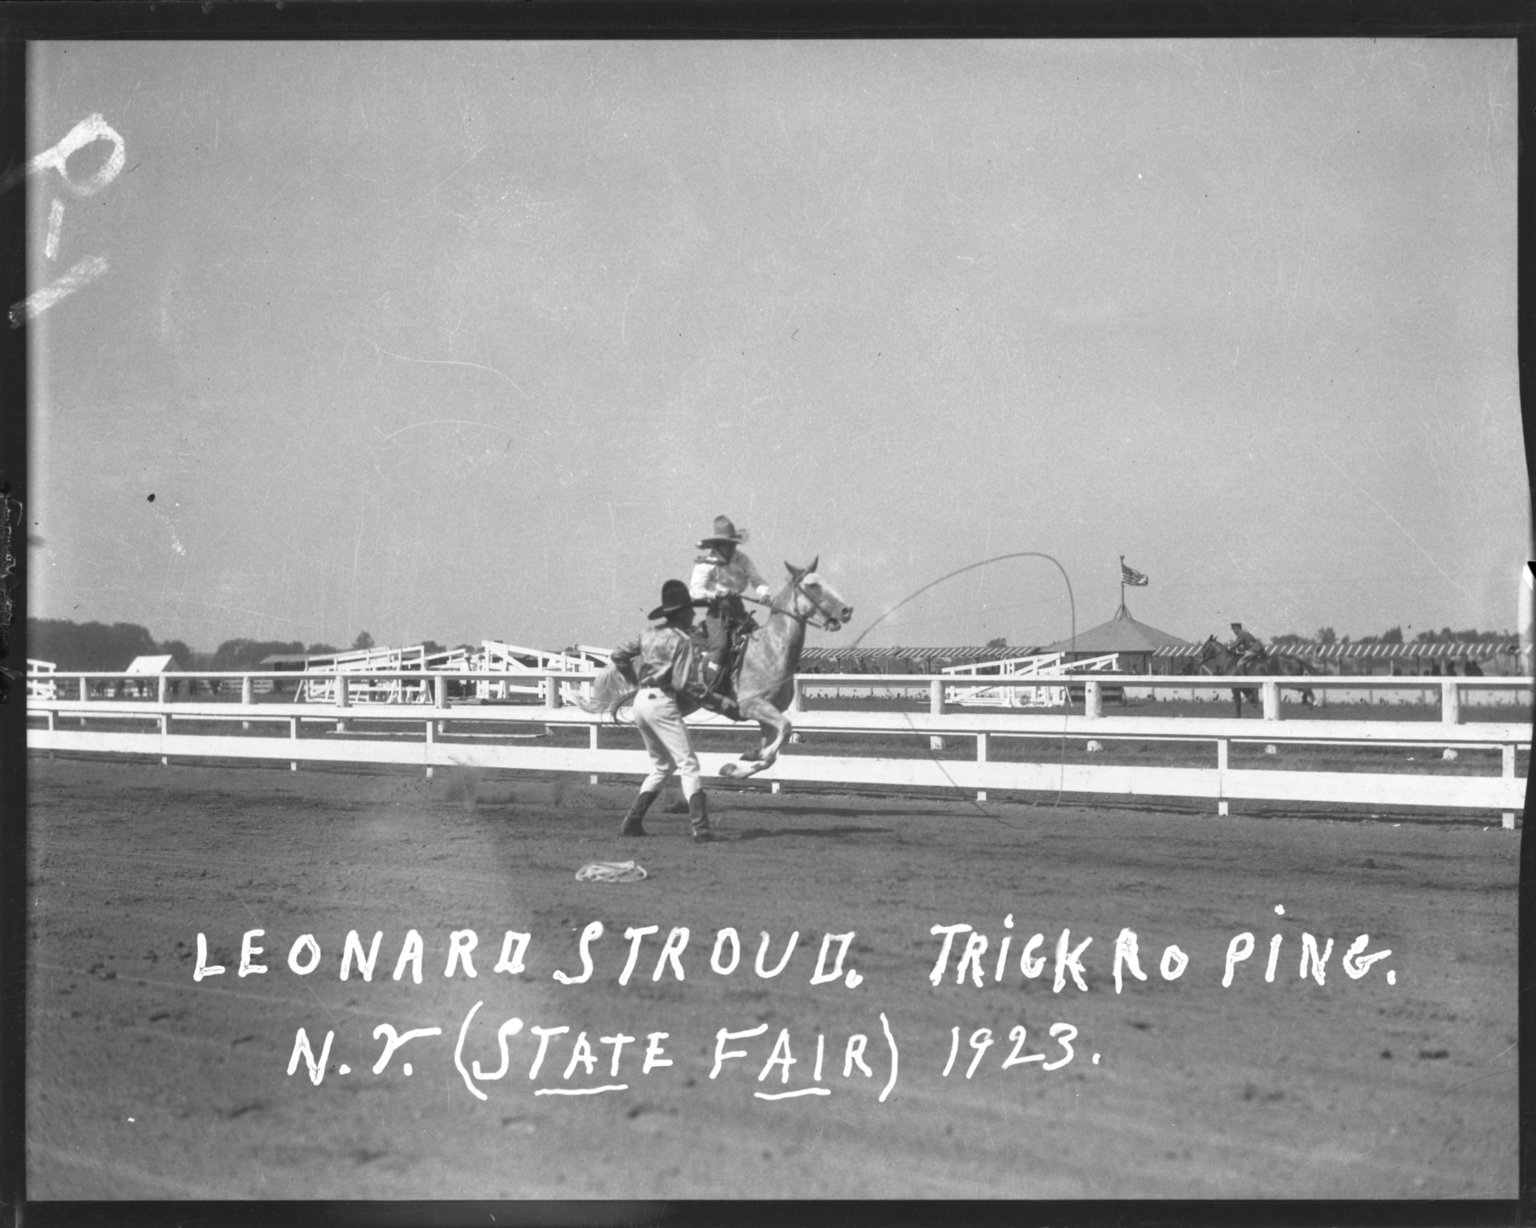 Leonard Stroud trick roping